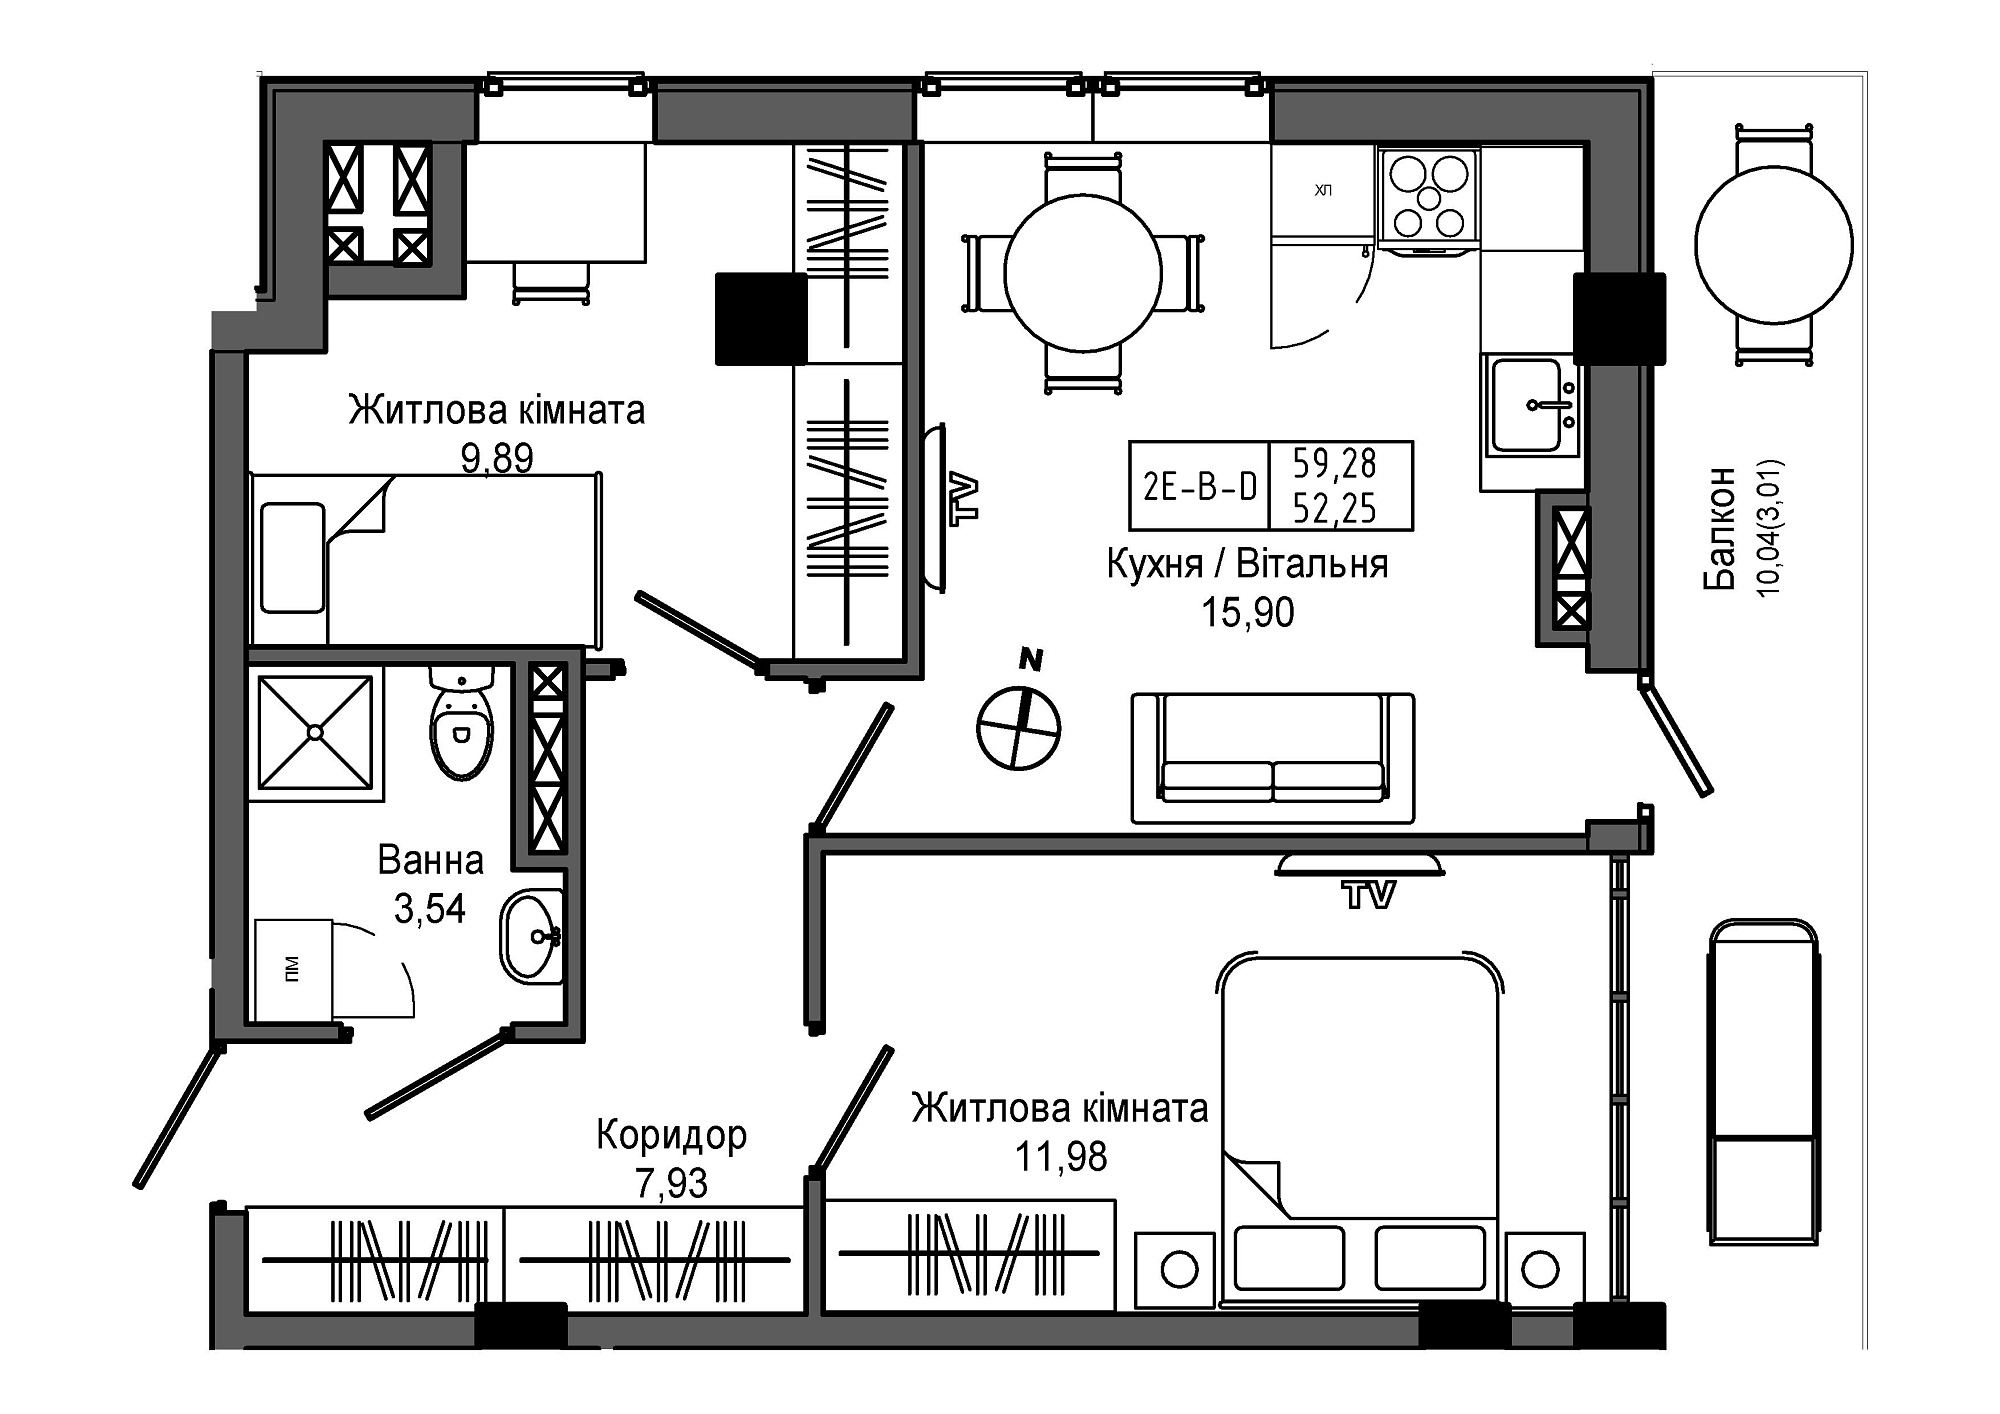 Planning 2-rm flats area 52.25m2, UM-006-07/0020.